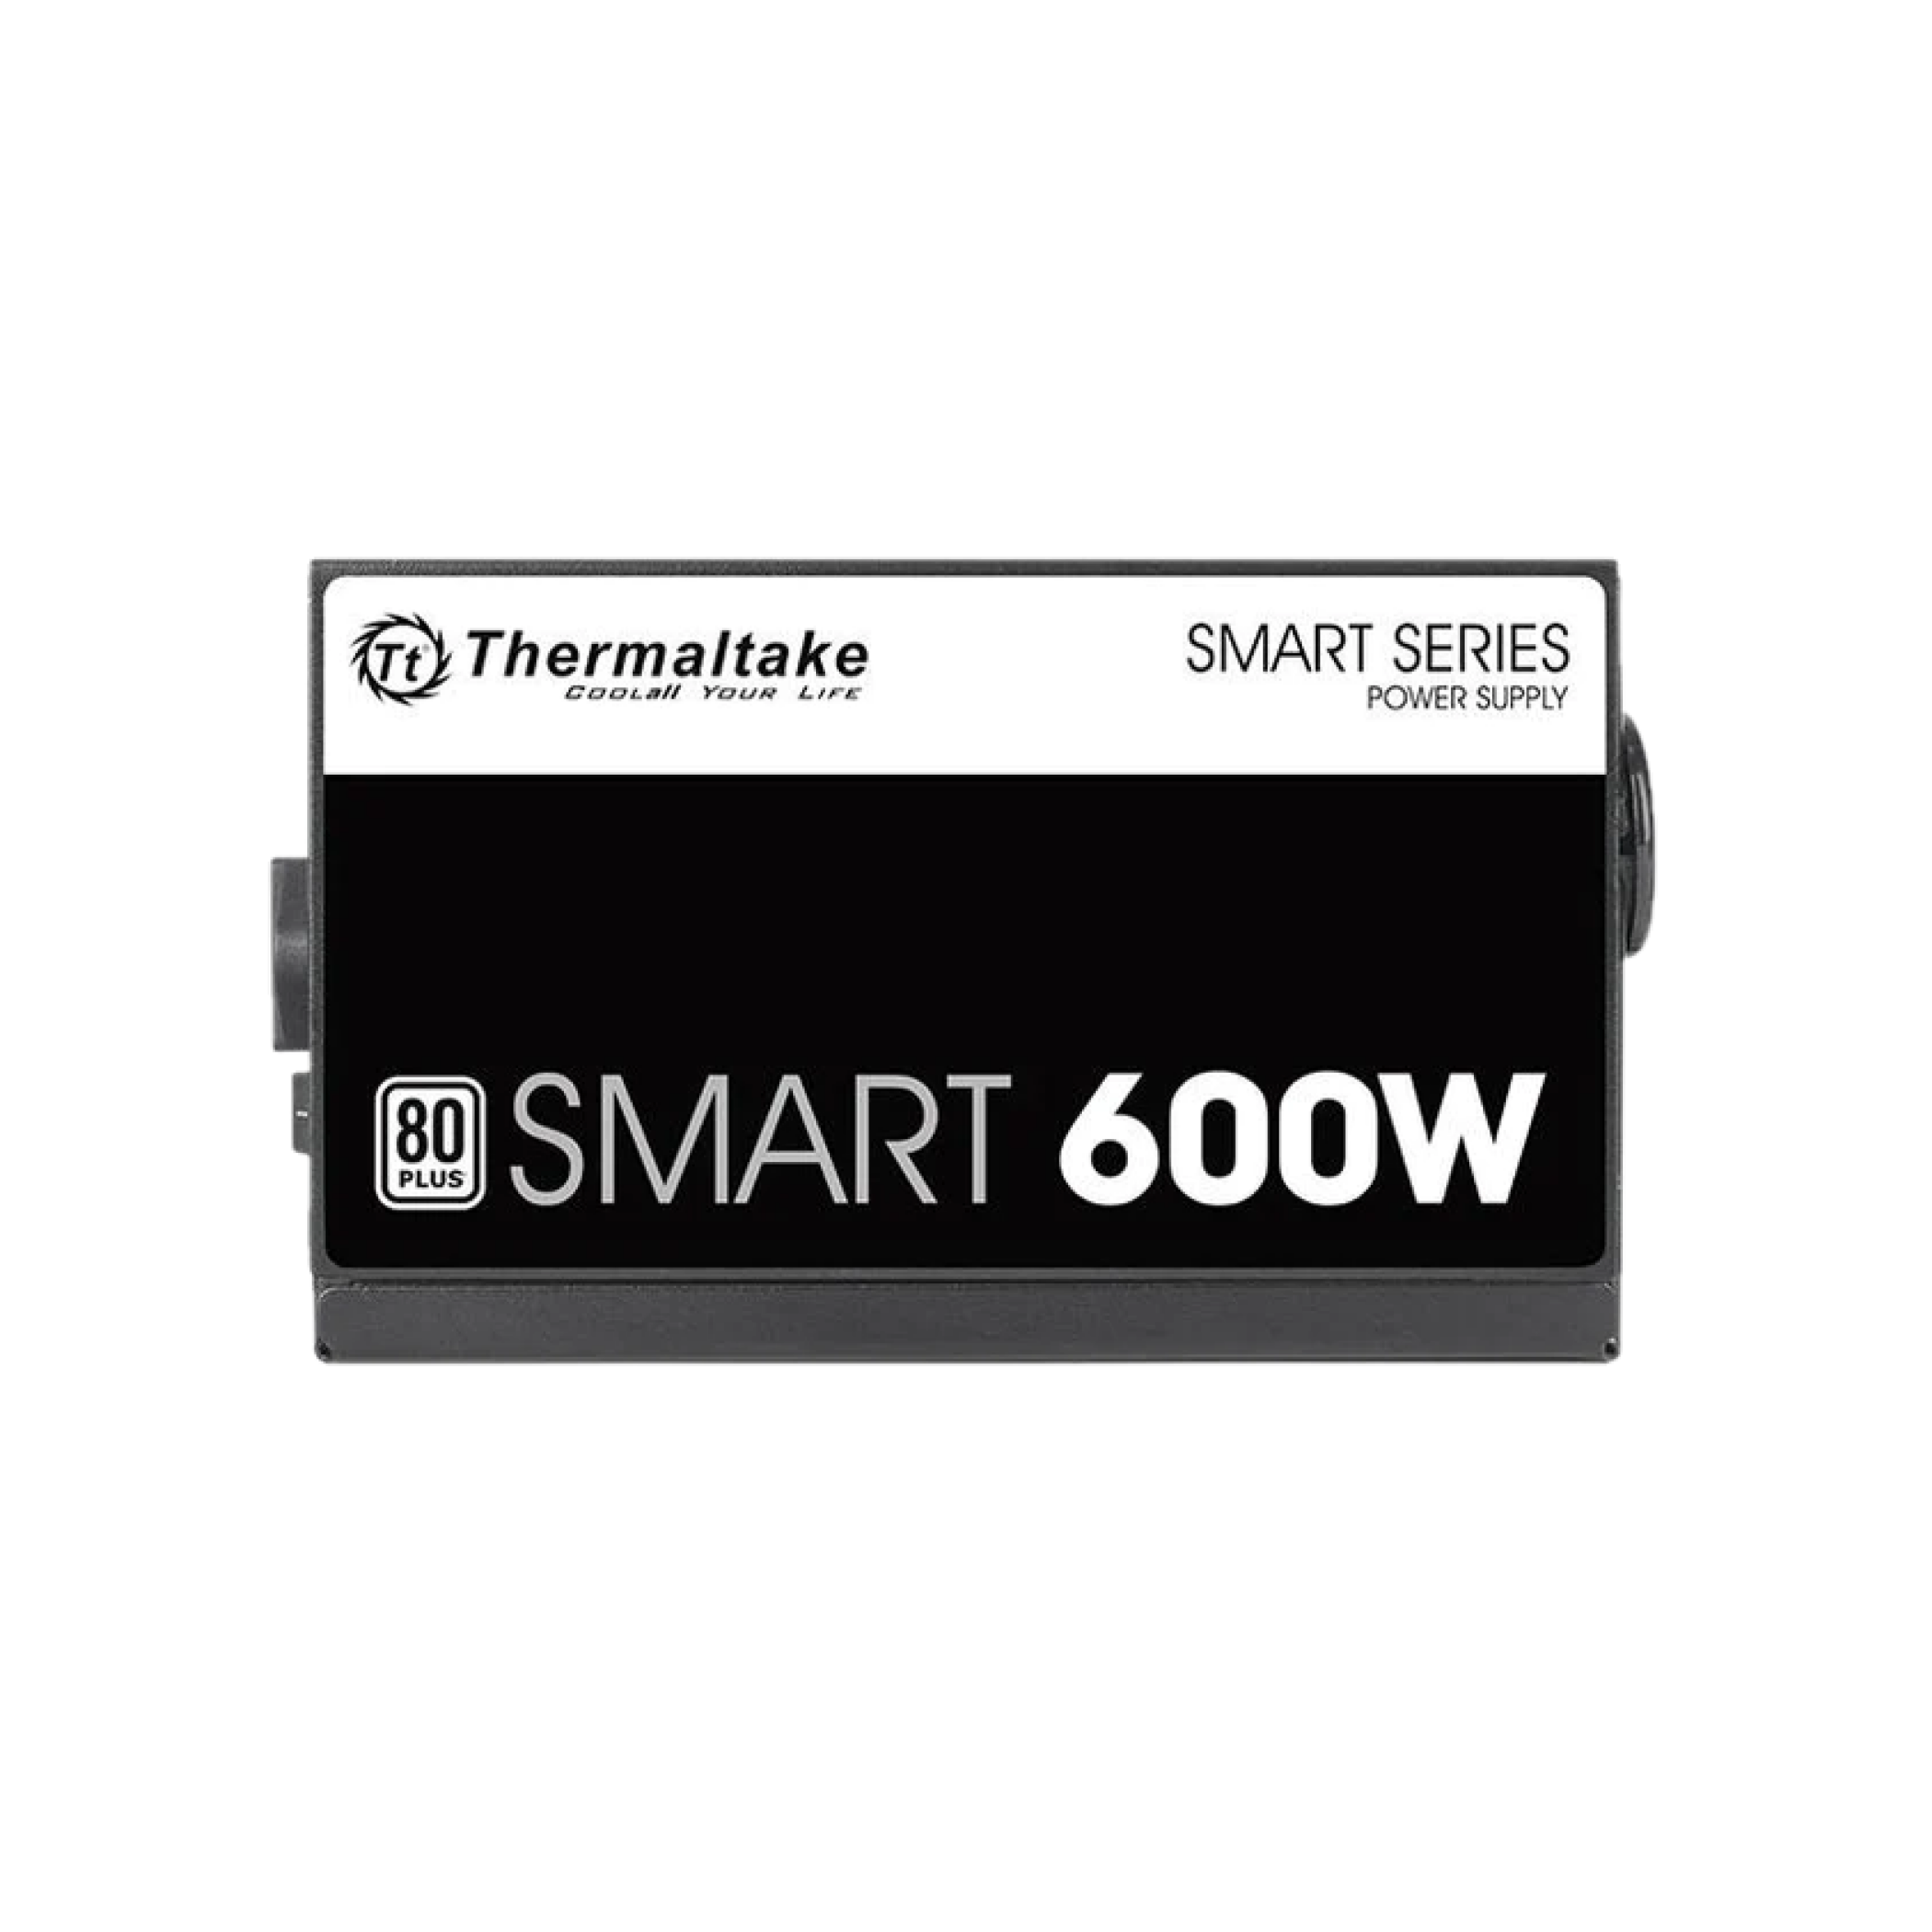 Thermaltake SMART 600W PSU.